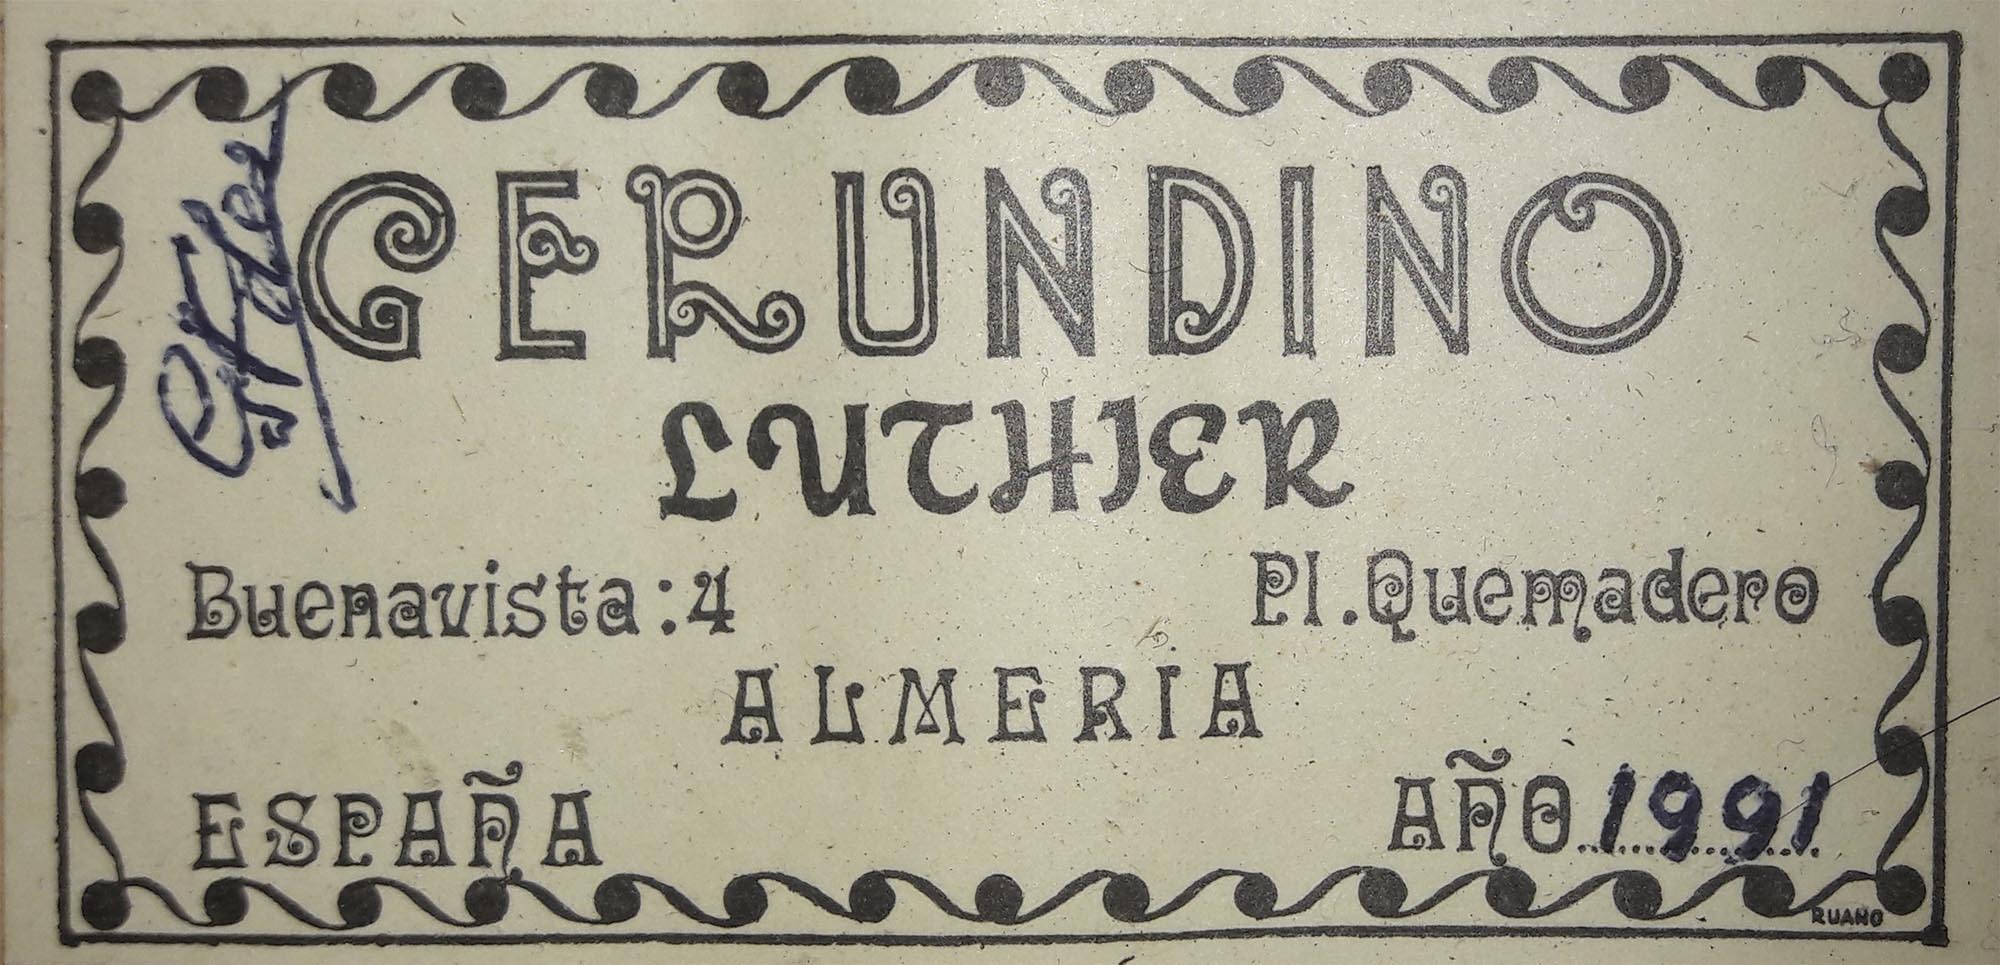 a gerundino fernandez 1991 25092018 label